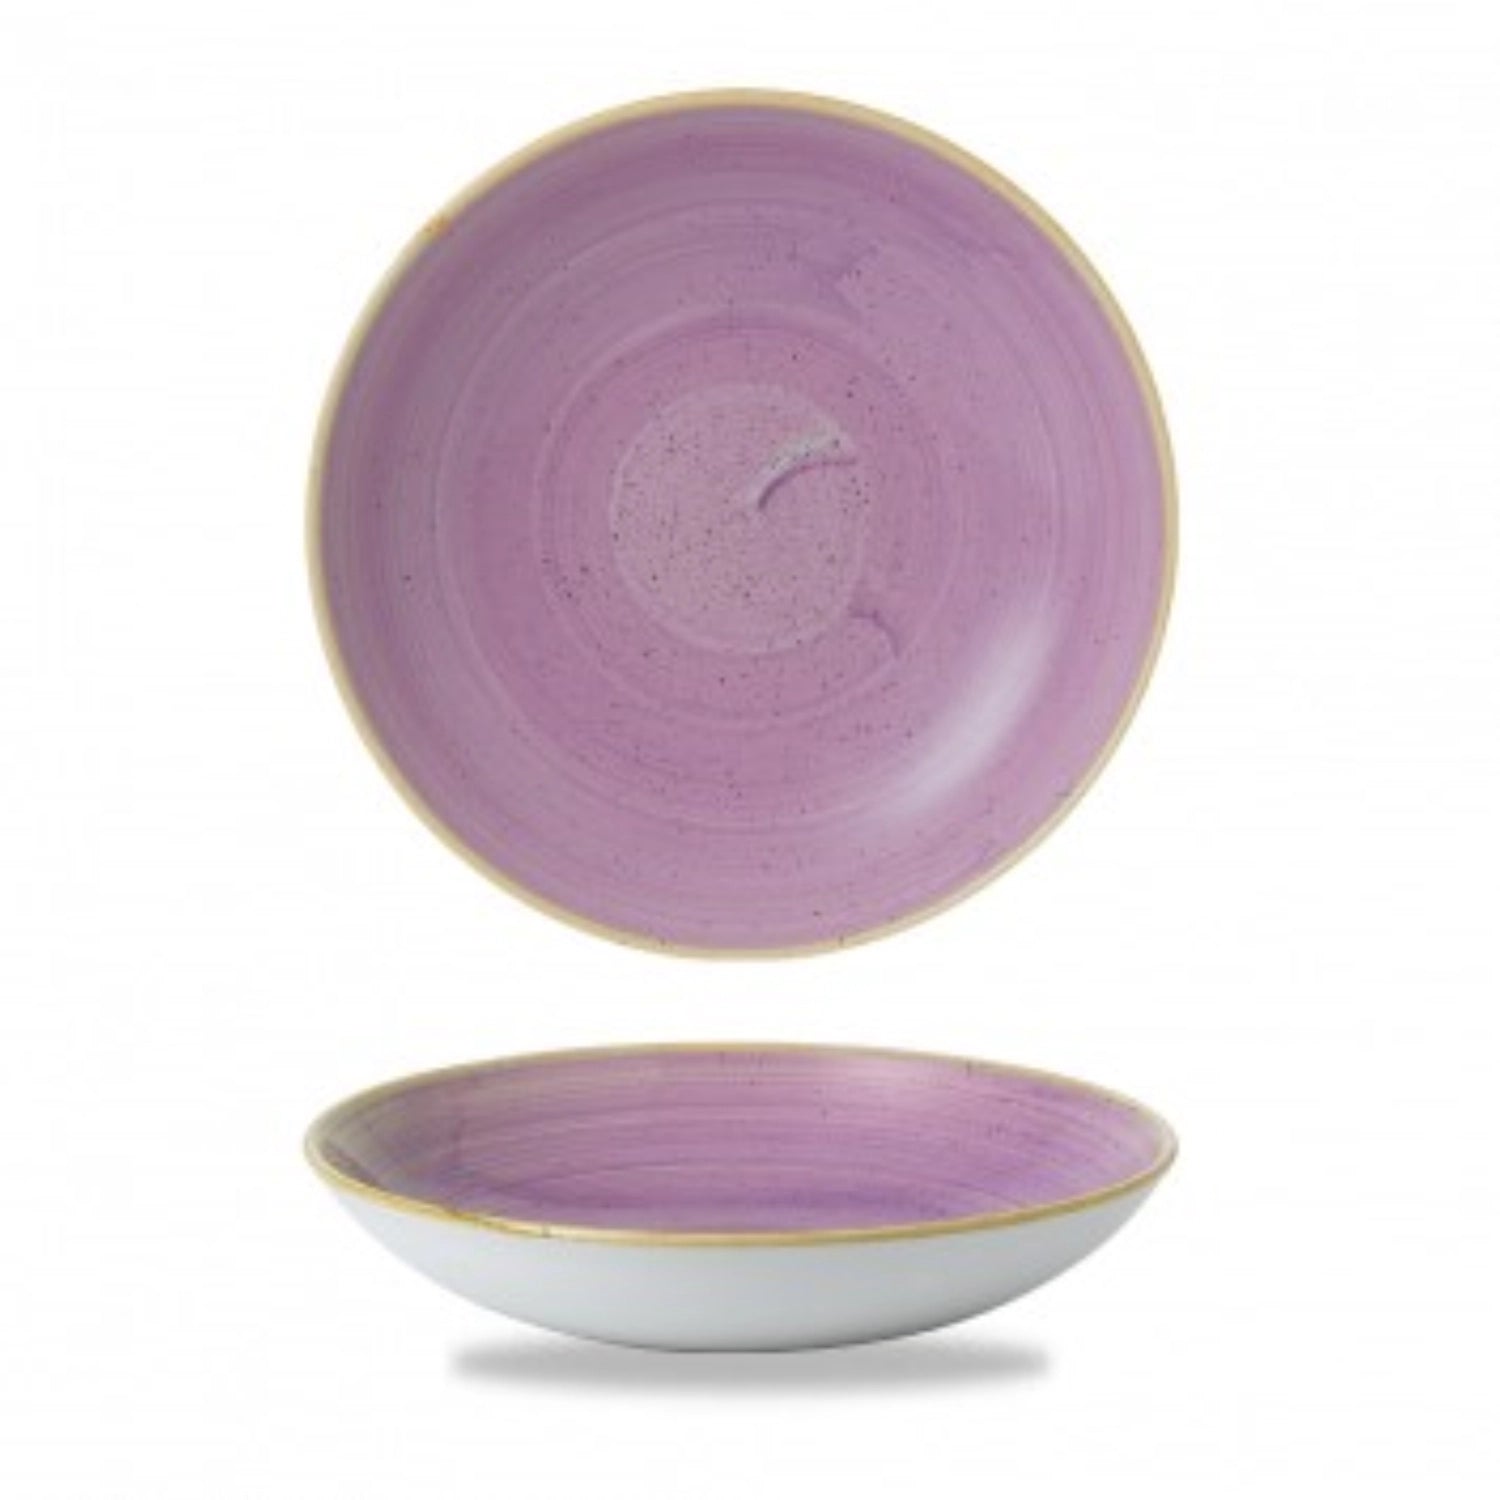 Stonecast lavender Teller tief 24.8cm 113.6cl - KAQTU Design